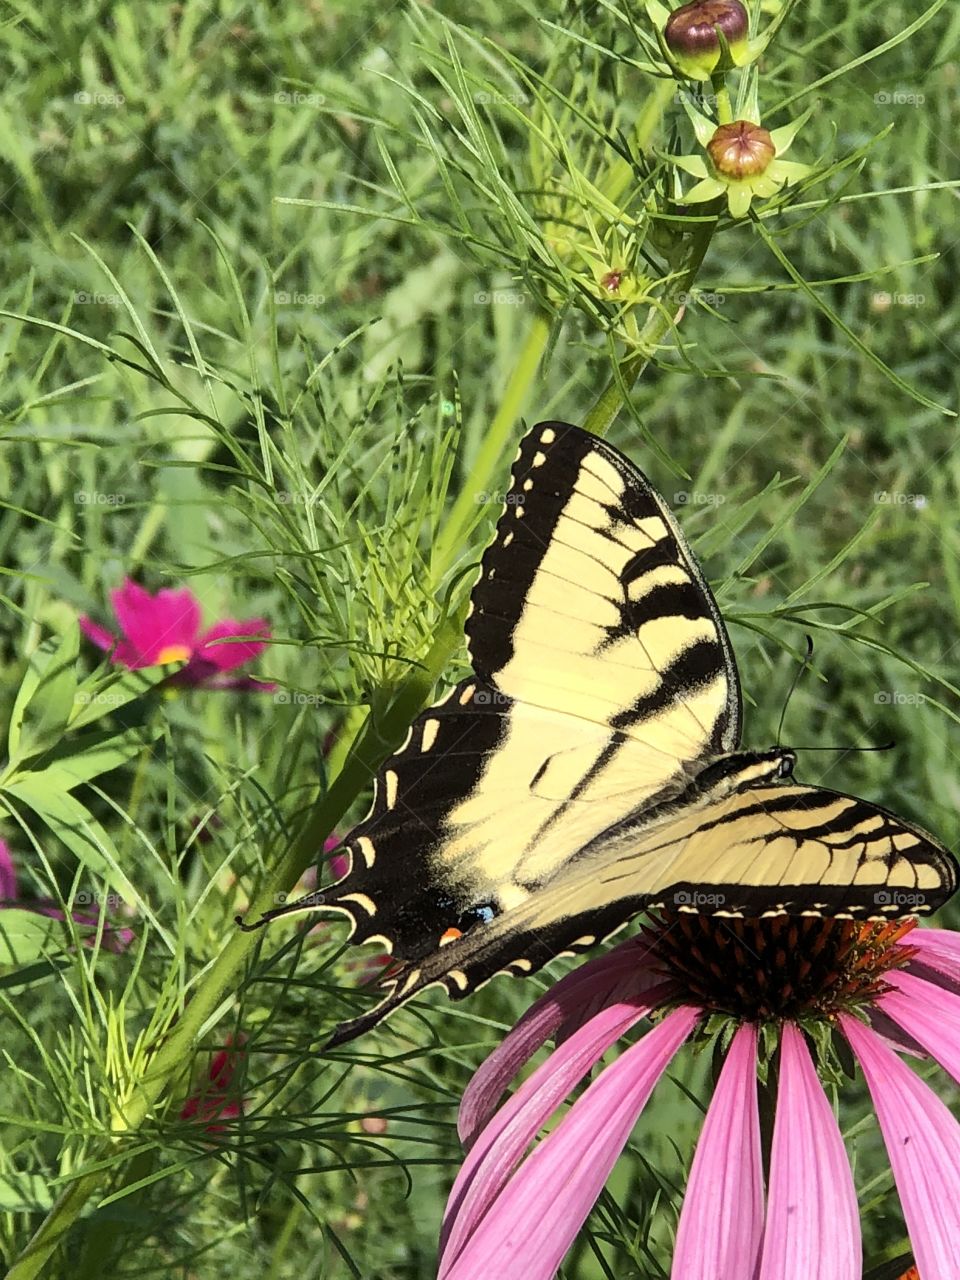 Butterfly resting on wildflower!